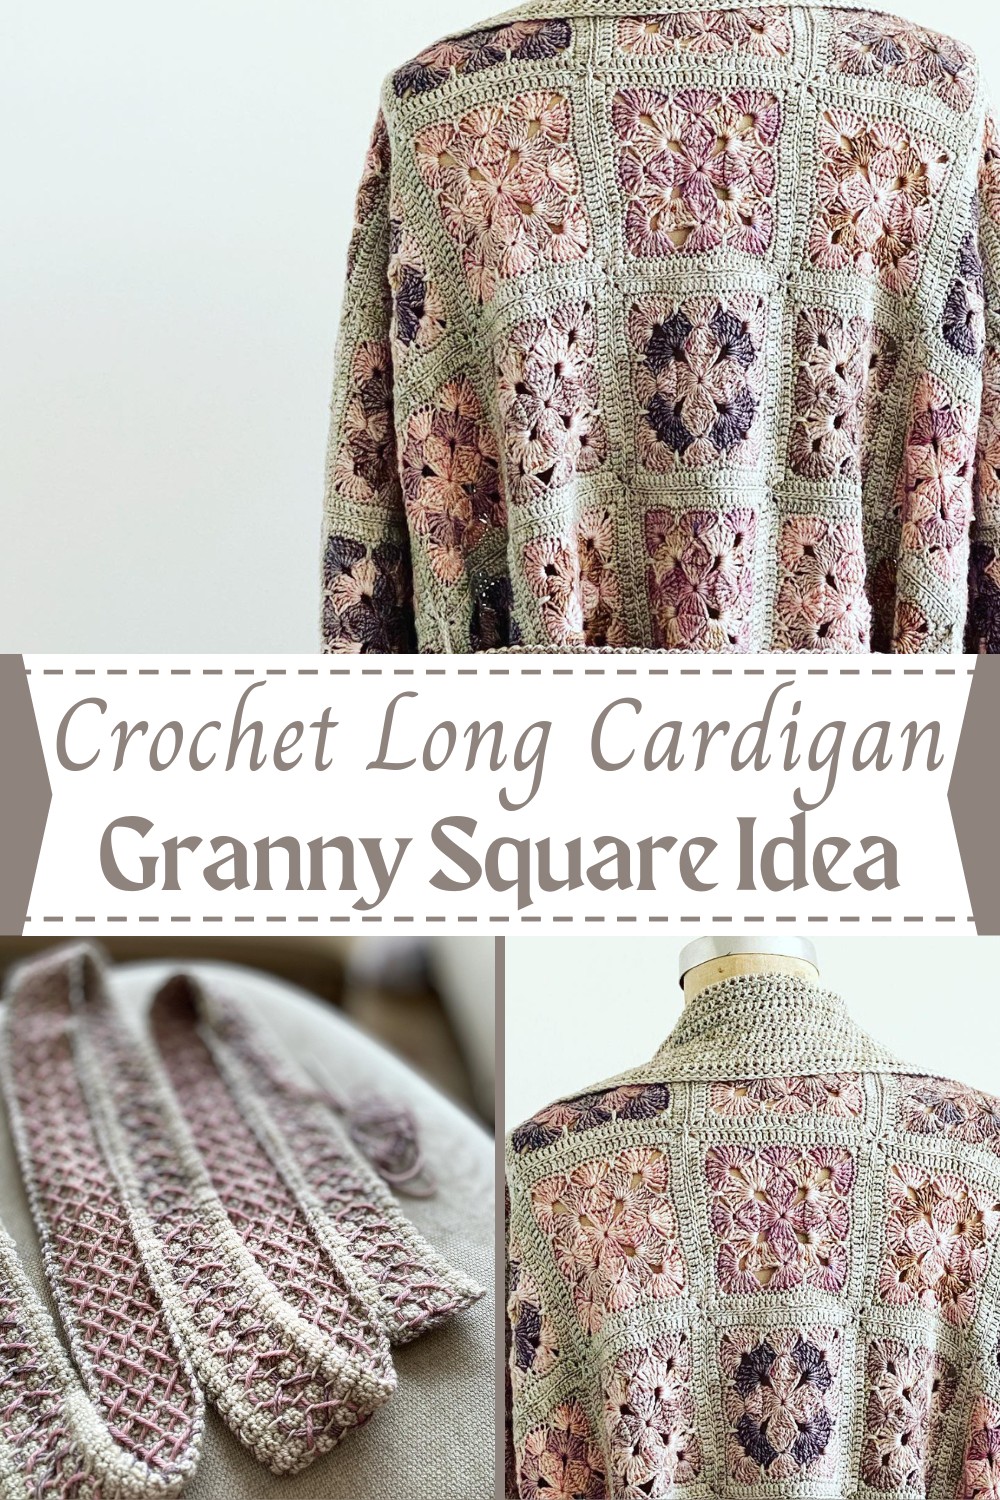 Crochet Long Granny Square Cardigan Idea With Shawl Collar